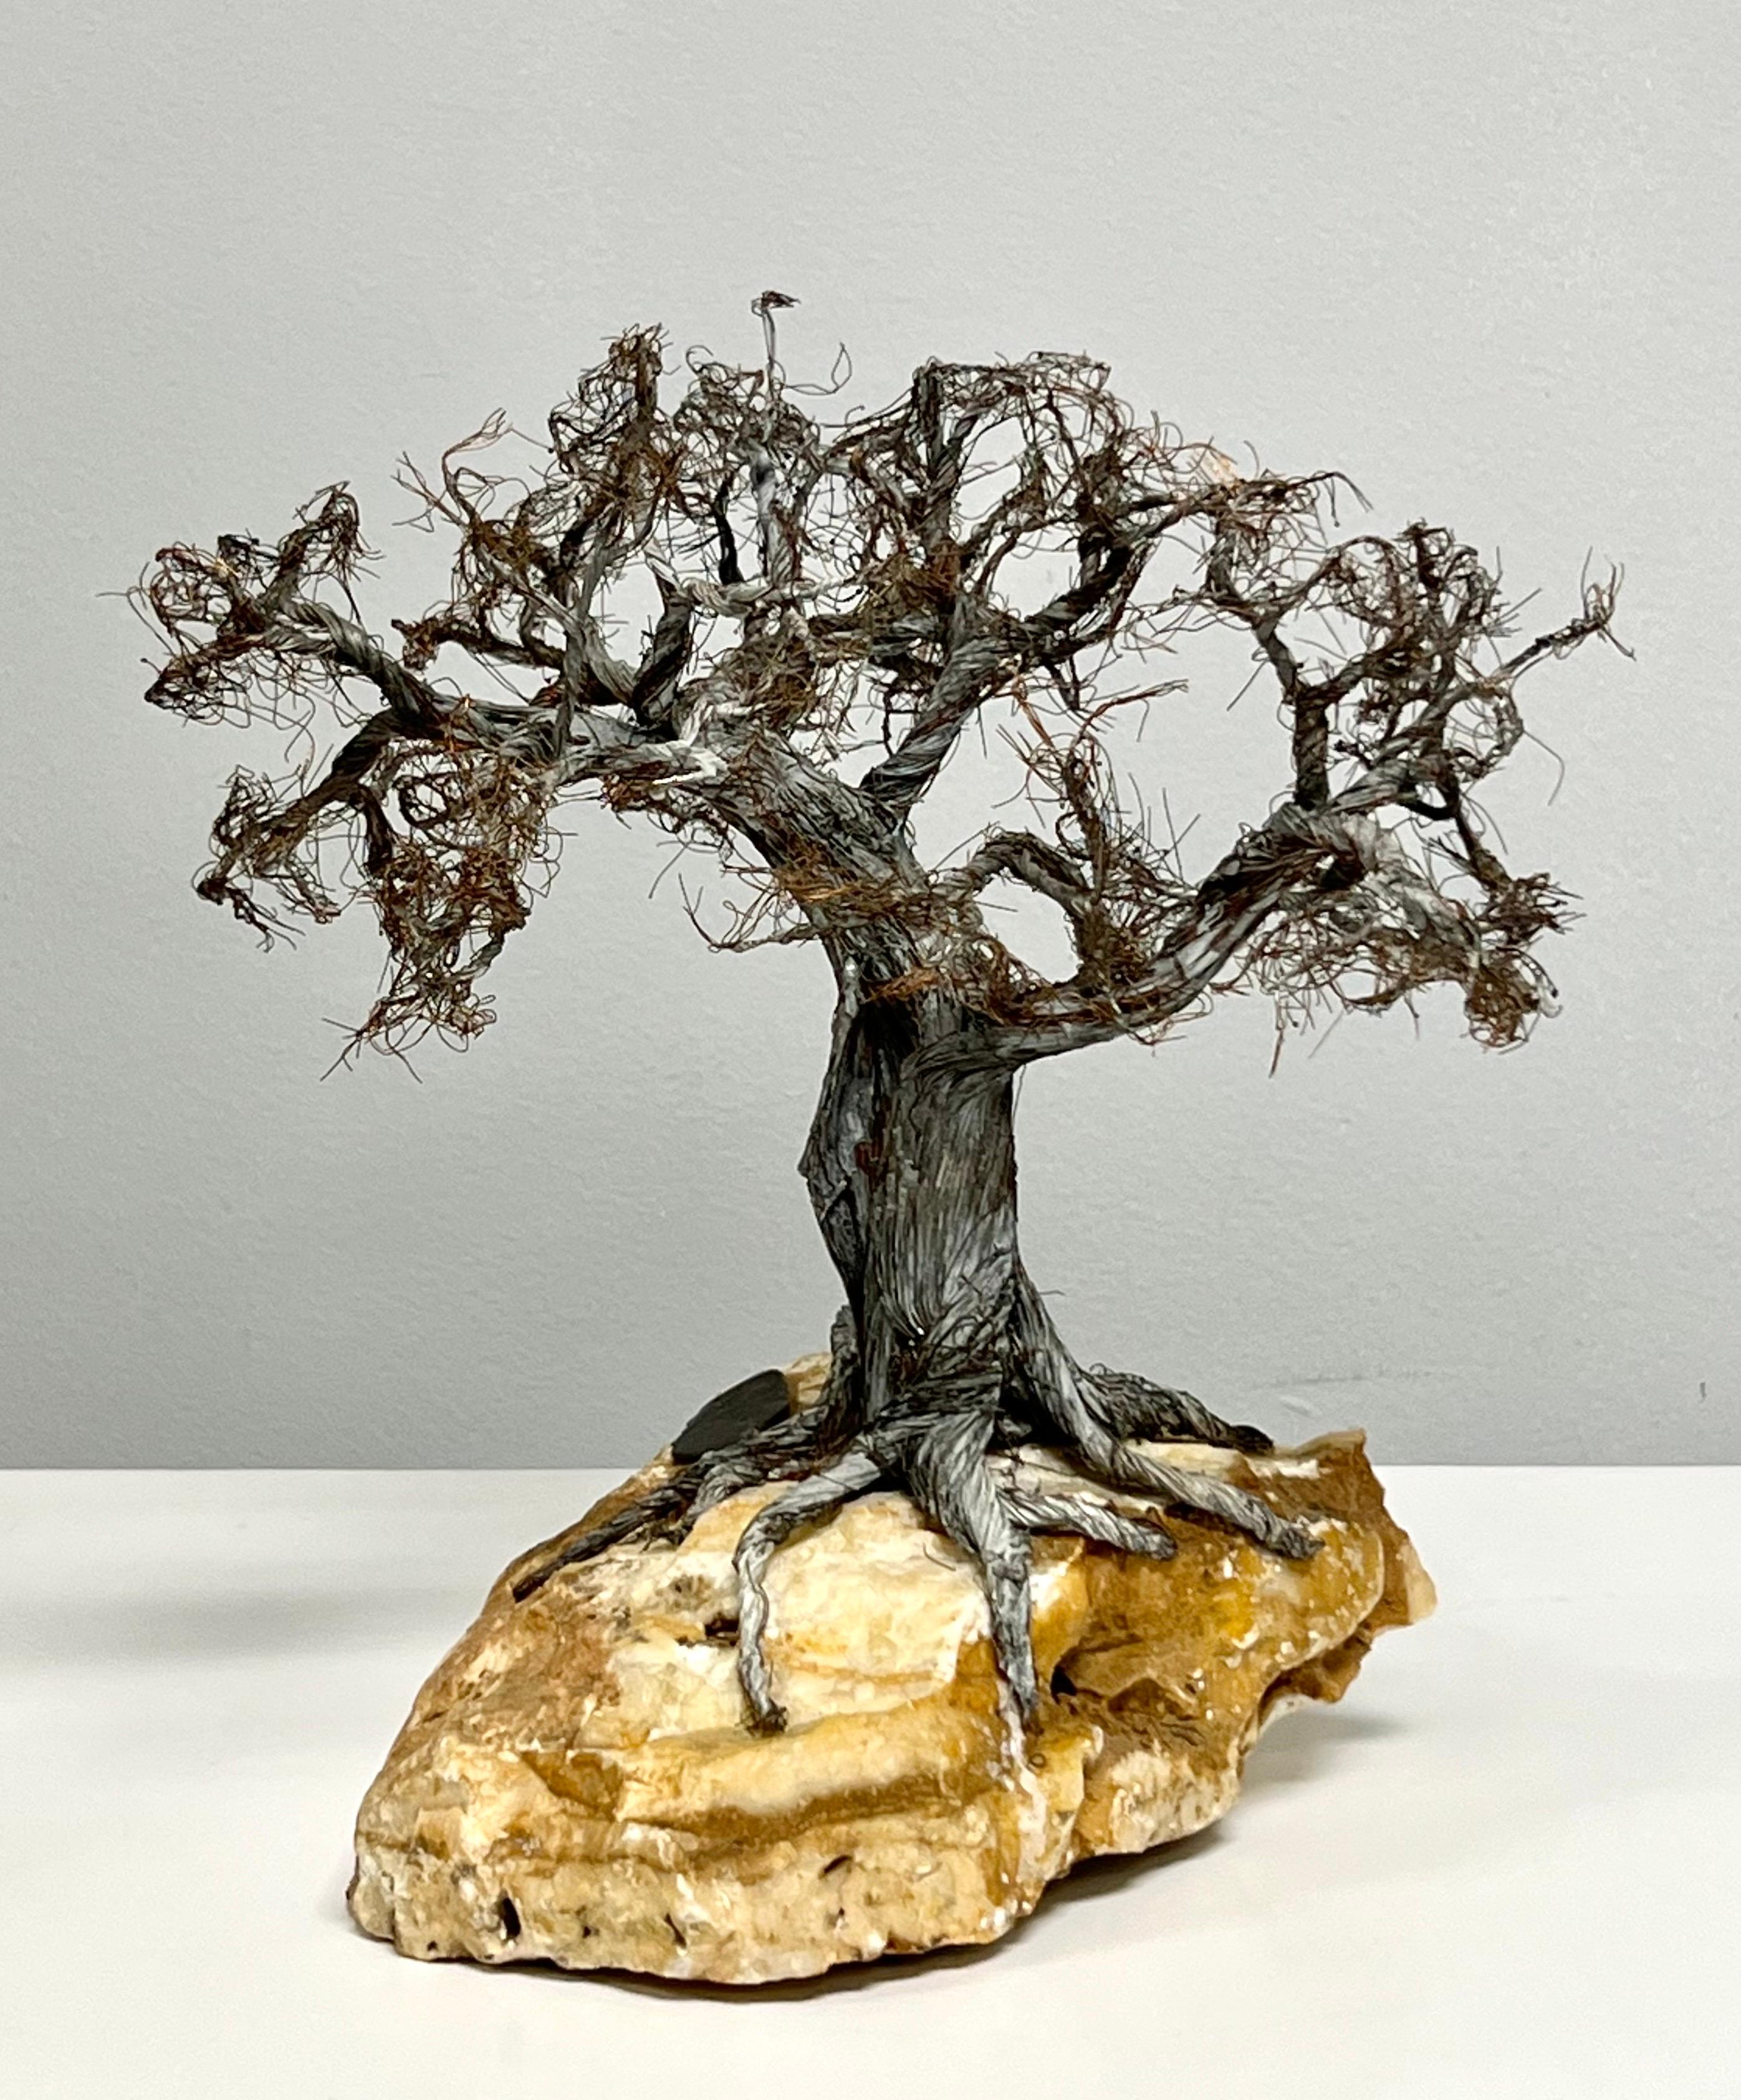 Mid-20th Century Modern Raw Edge Botanical Art Bonsai Tree Sculpture on Stone  For Sale